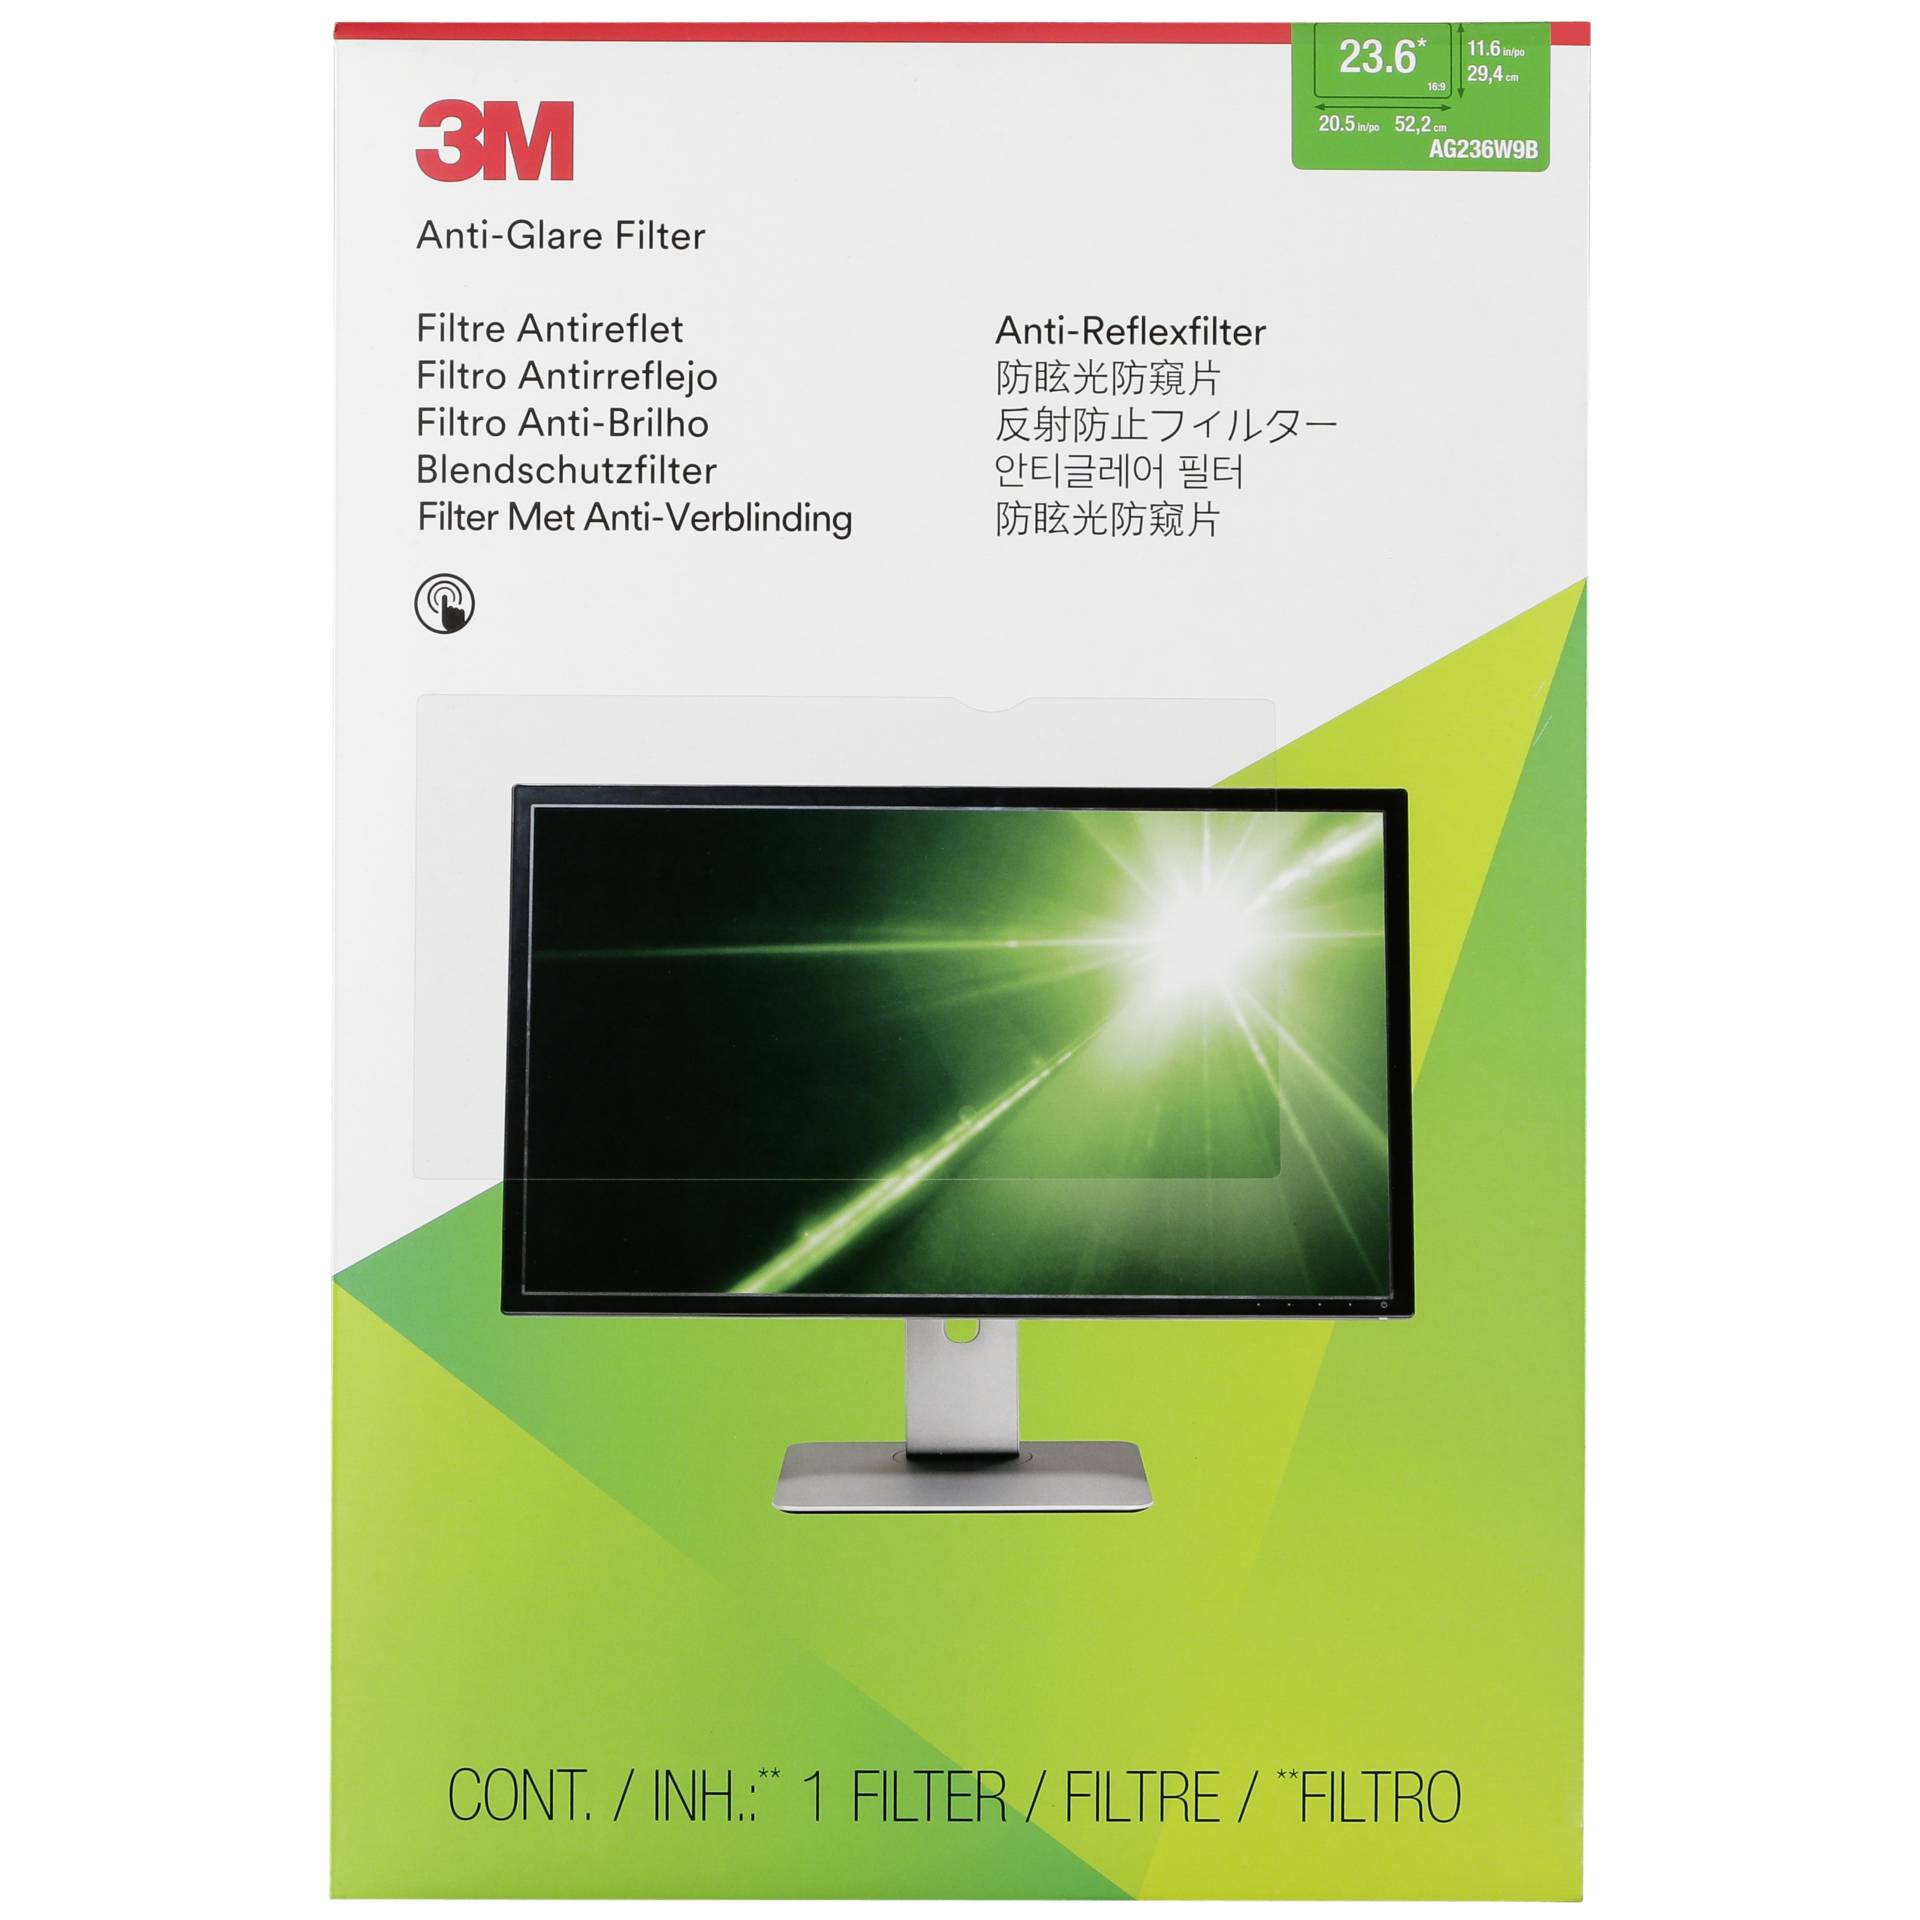 3M AG236W9B Filtro antiriflesso per LCD Widescreen Monitor 2